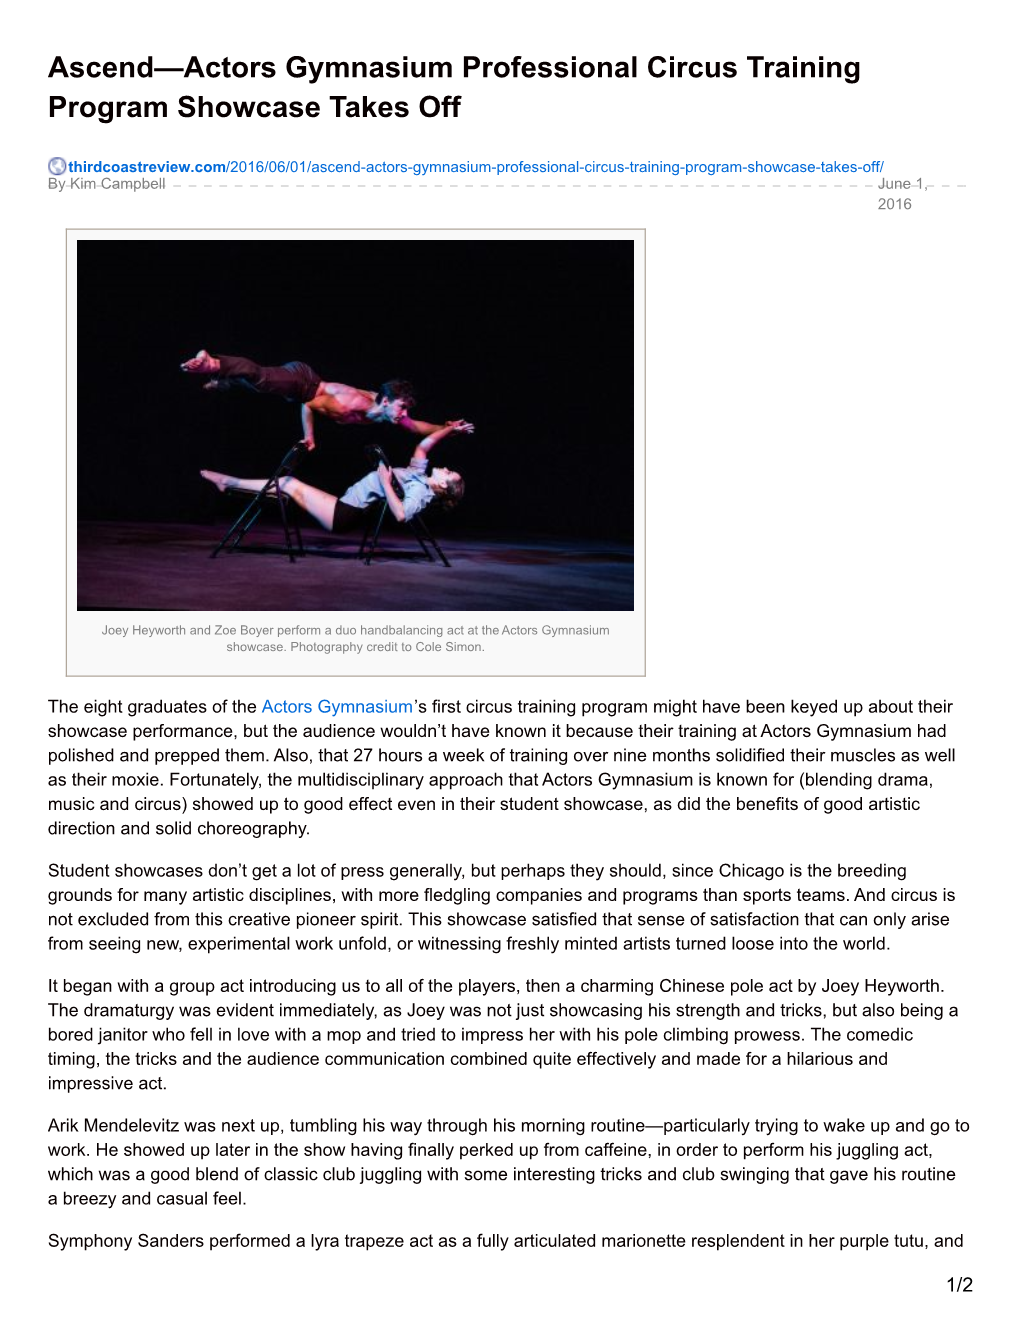 Ascend—Actors Gymnasium Professional Circus Training Program Showcase Takes Off